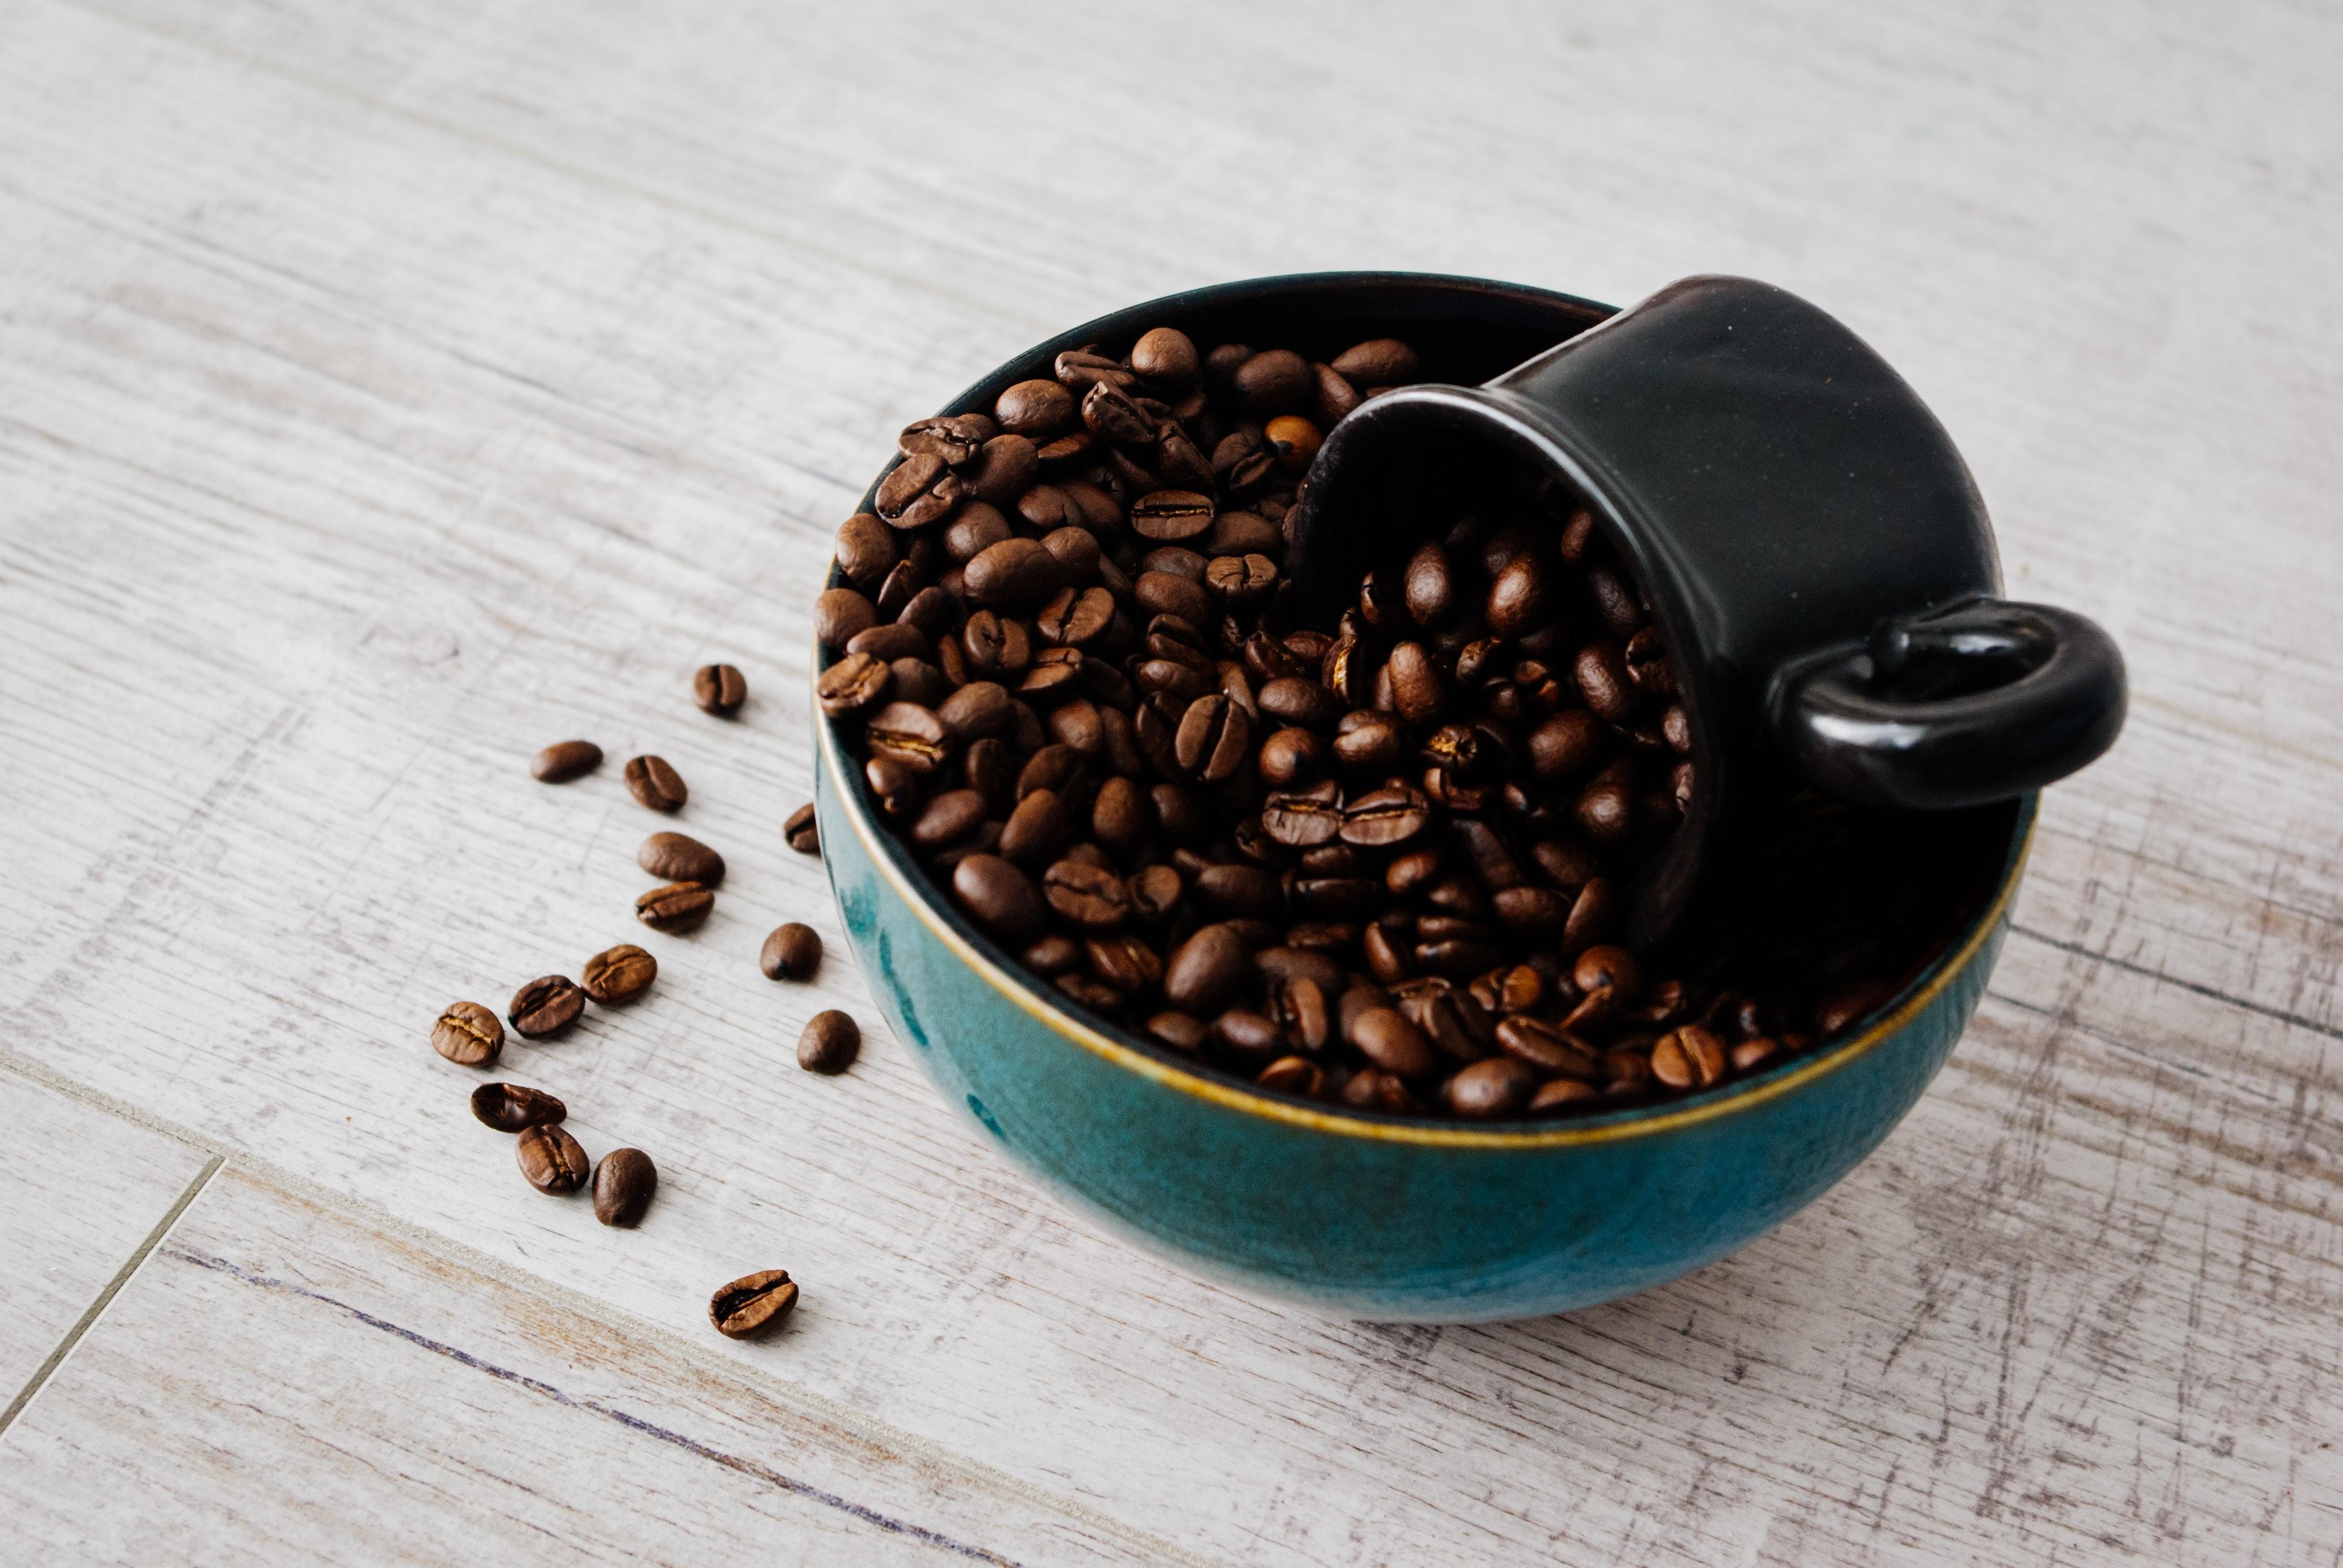 Does Starbucks whole bean coffee expire? 